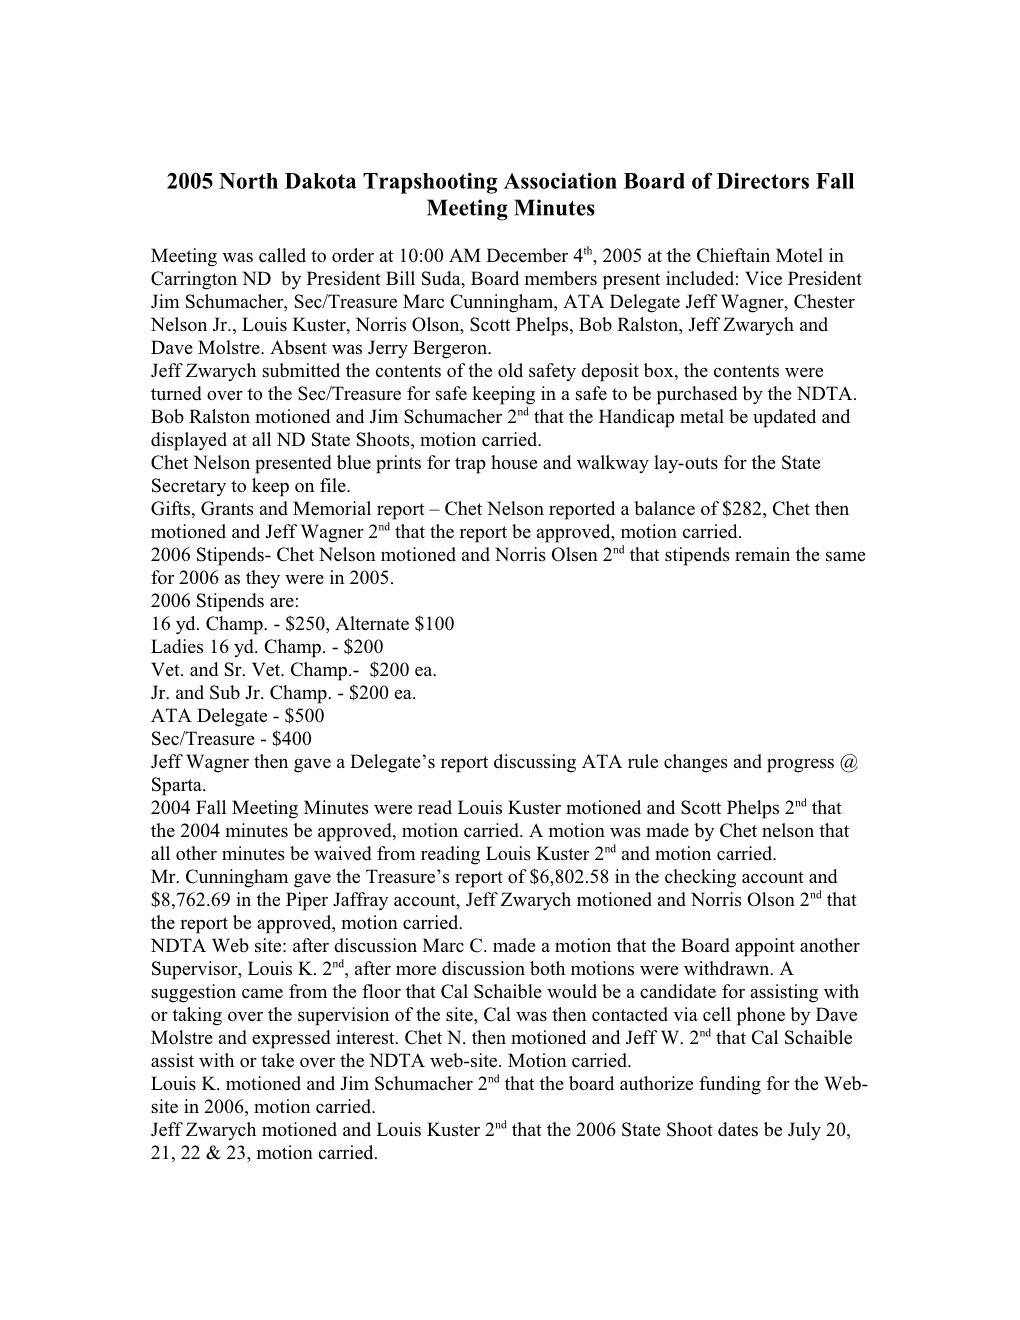 2005 North Dakota Trapshooting Association Board of Directors Fall Meeting Minutes